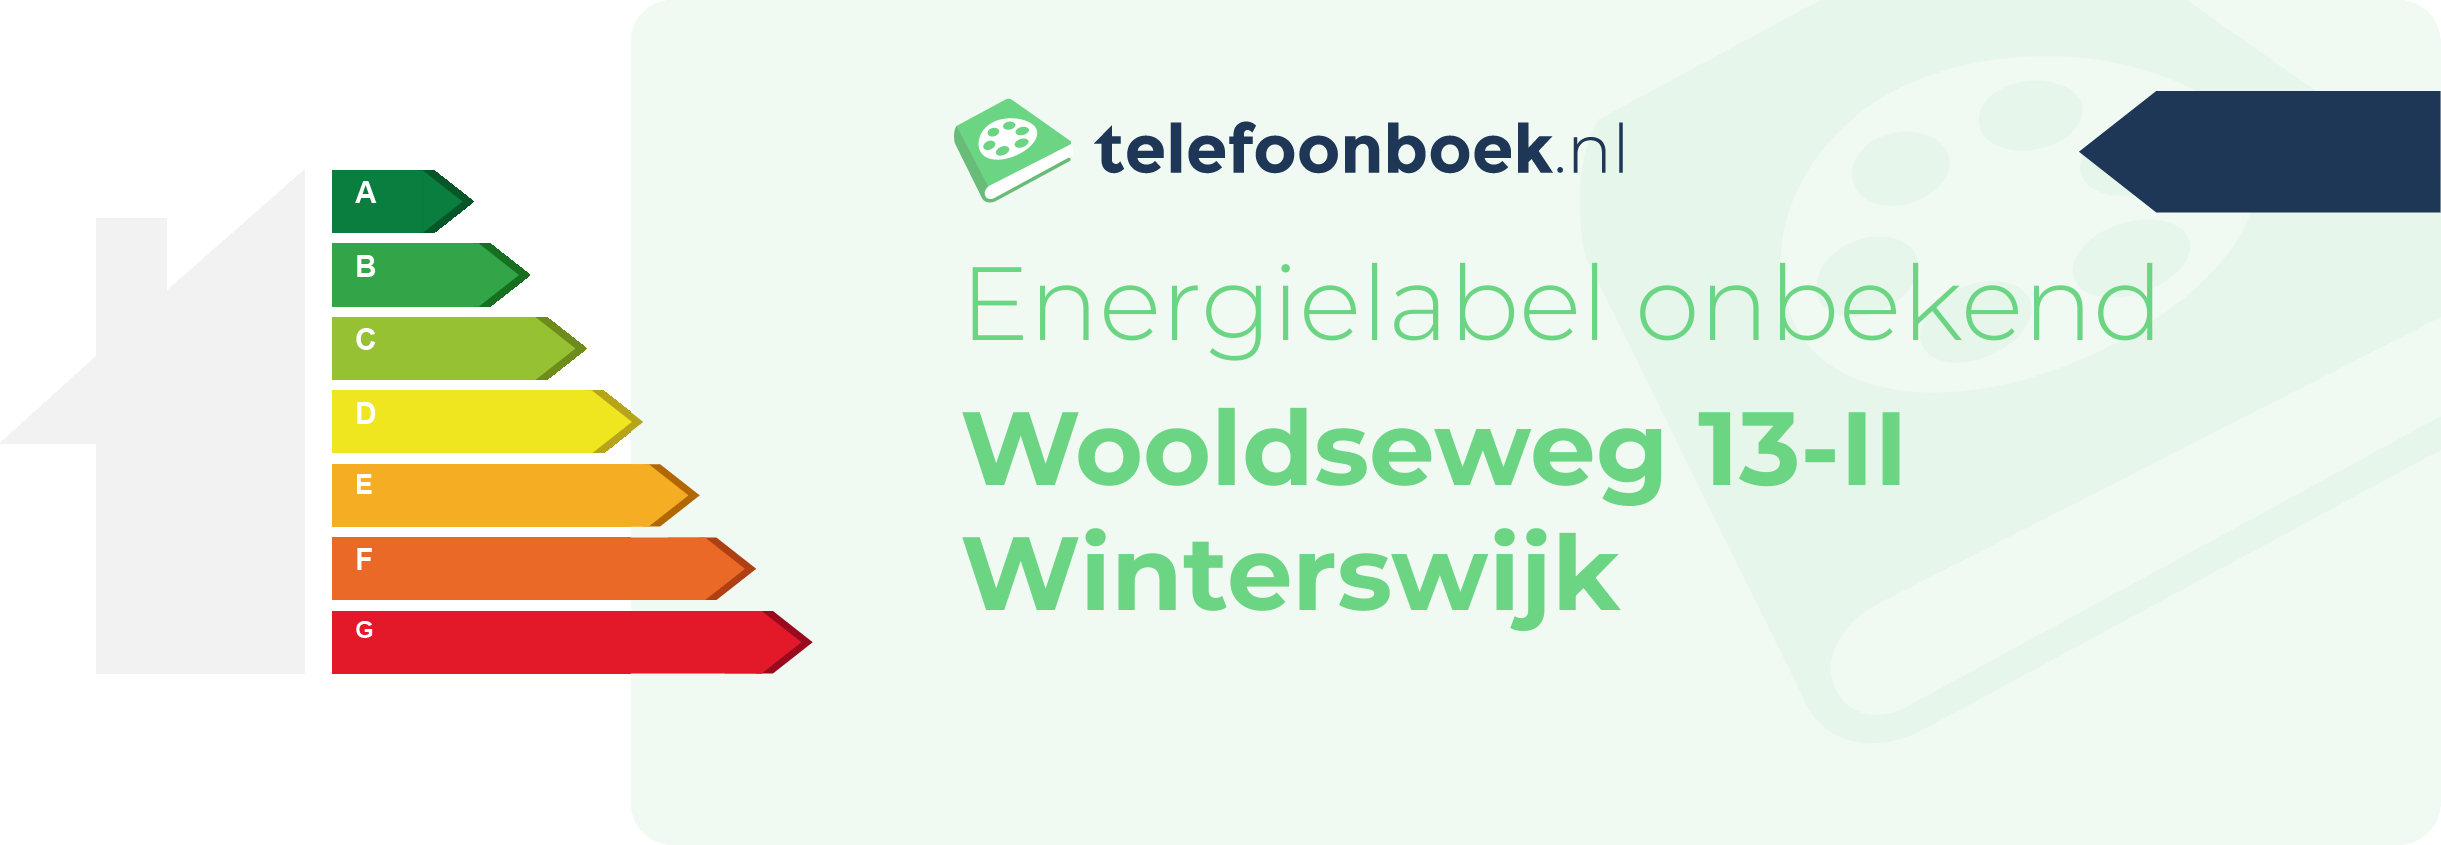 Energielabel Wooldseweg 13-II Winterswijk